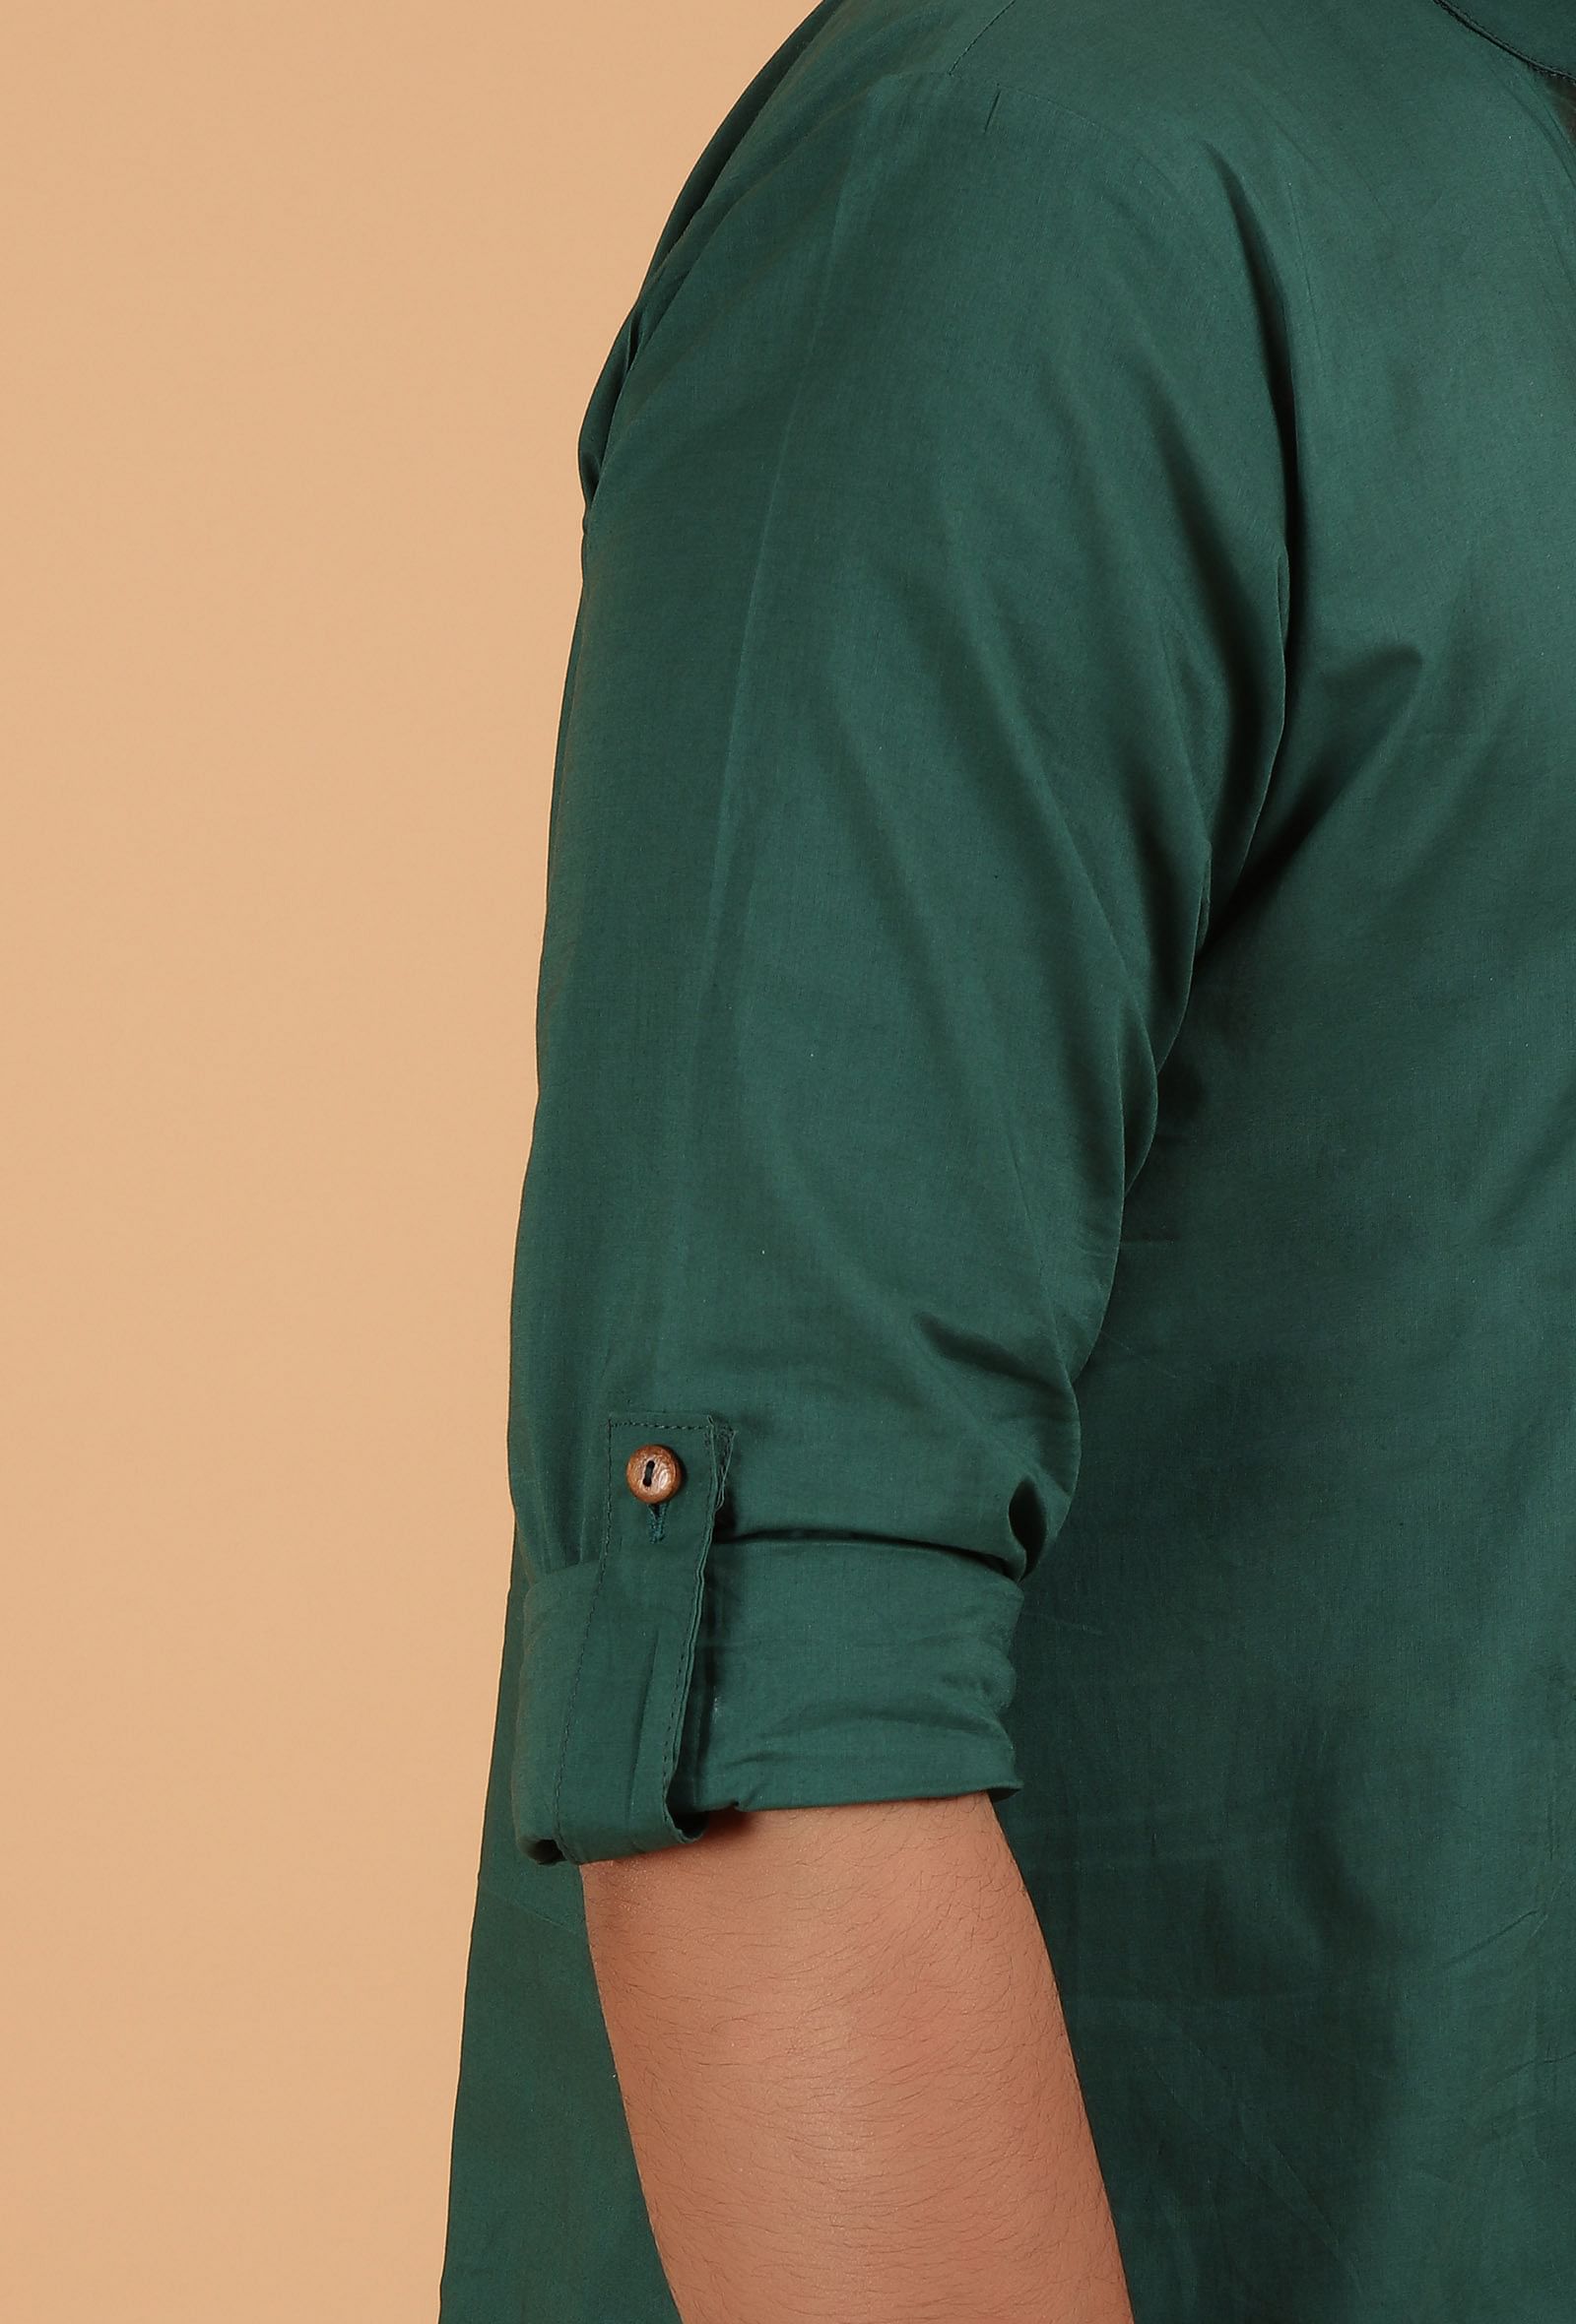 Pine Green Plain Sustainable Cotton Shirt